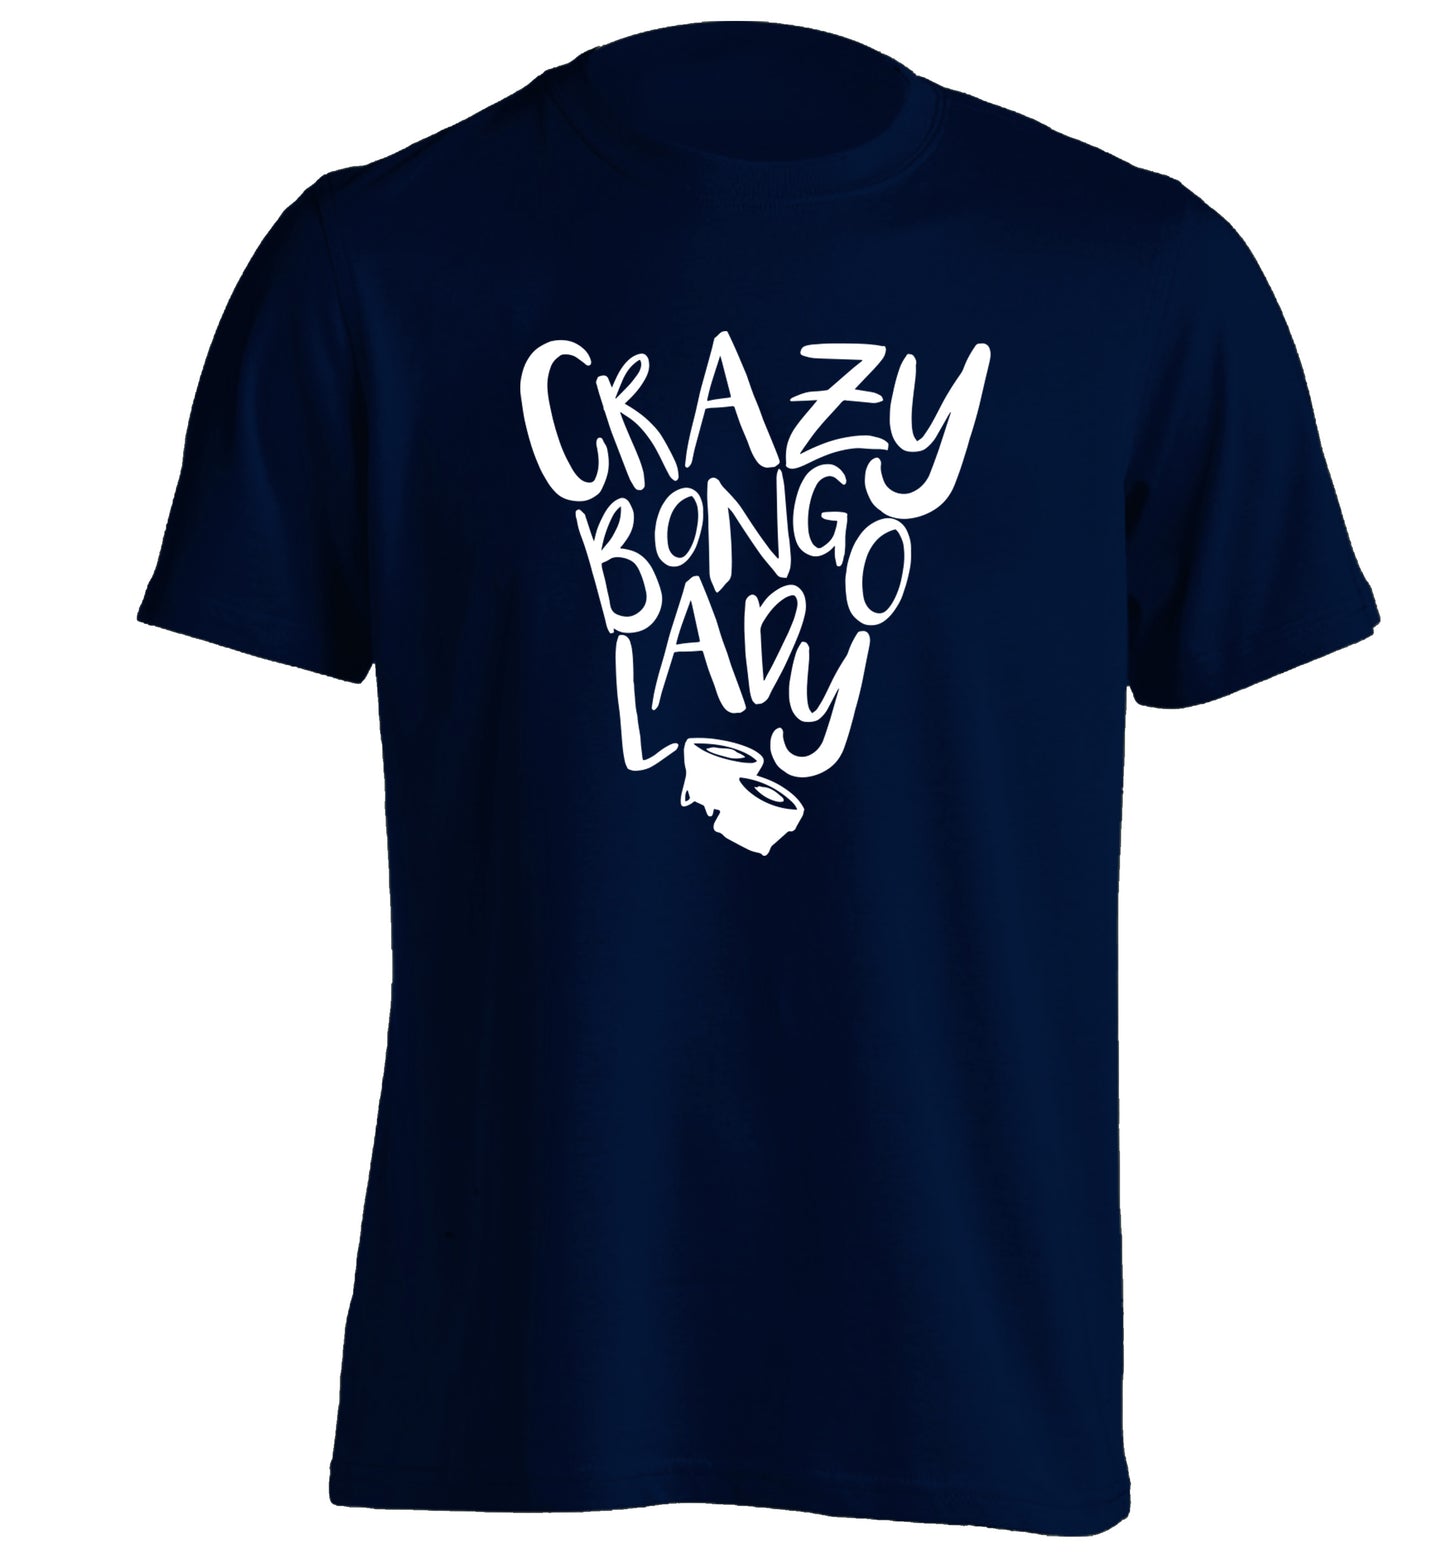 Crazy bongo lady adults unisex navy Tshirt 2XL